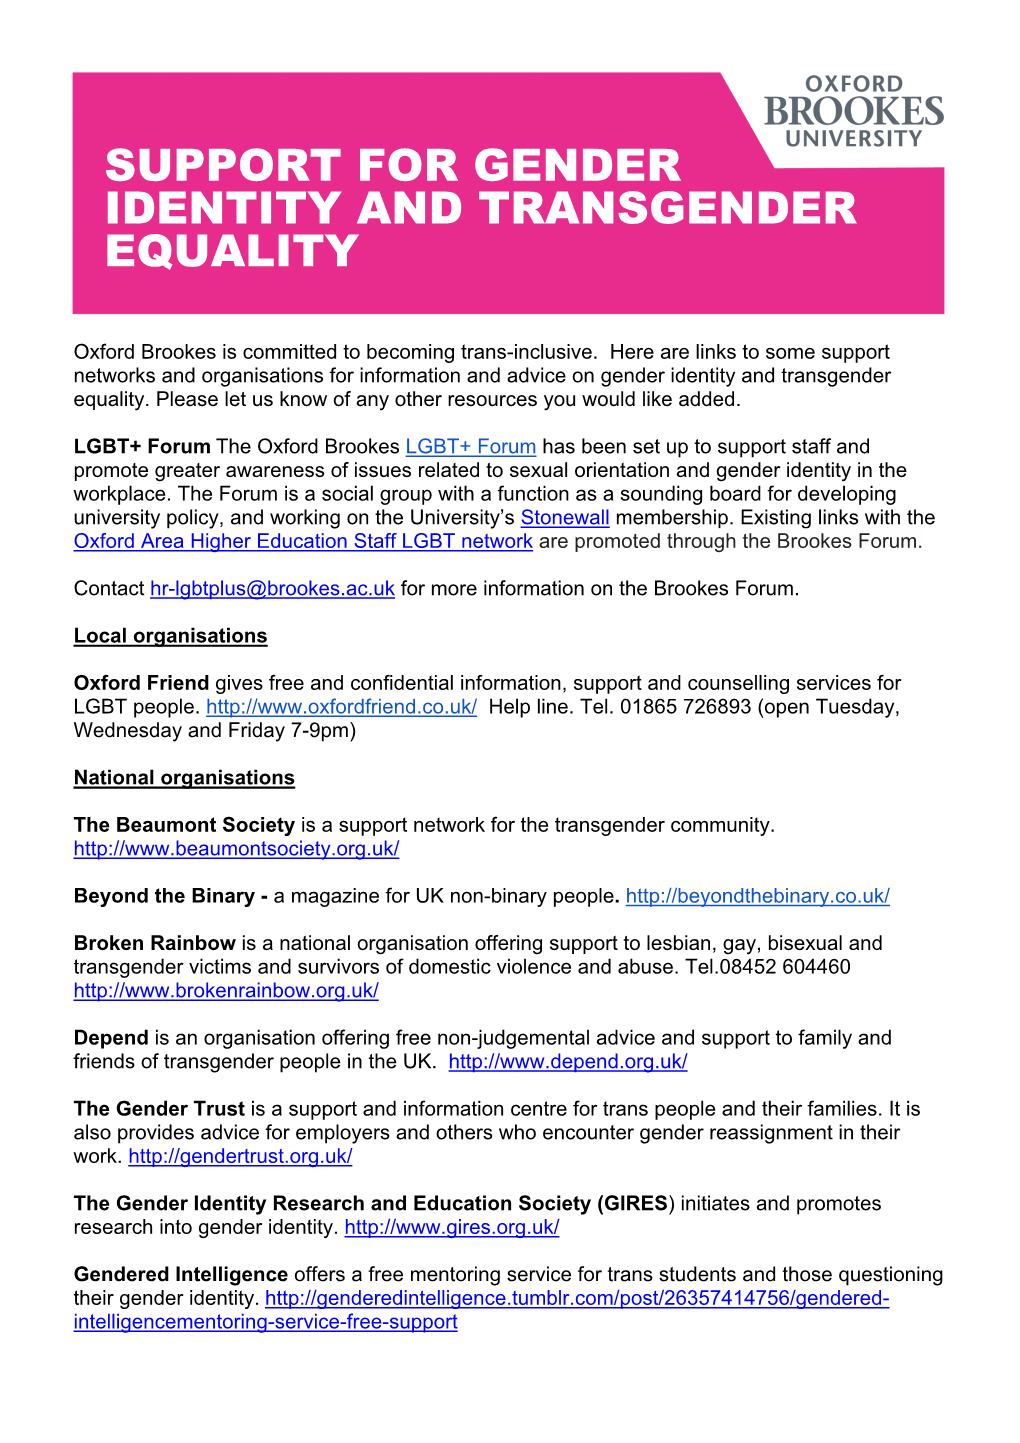 Support for Gender Identity and Transgender Equality